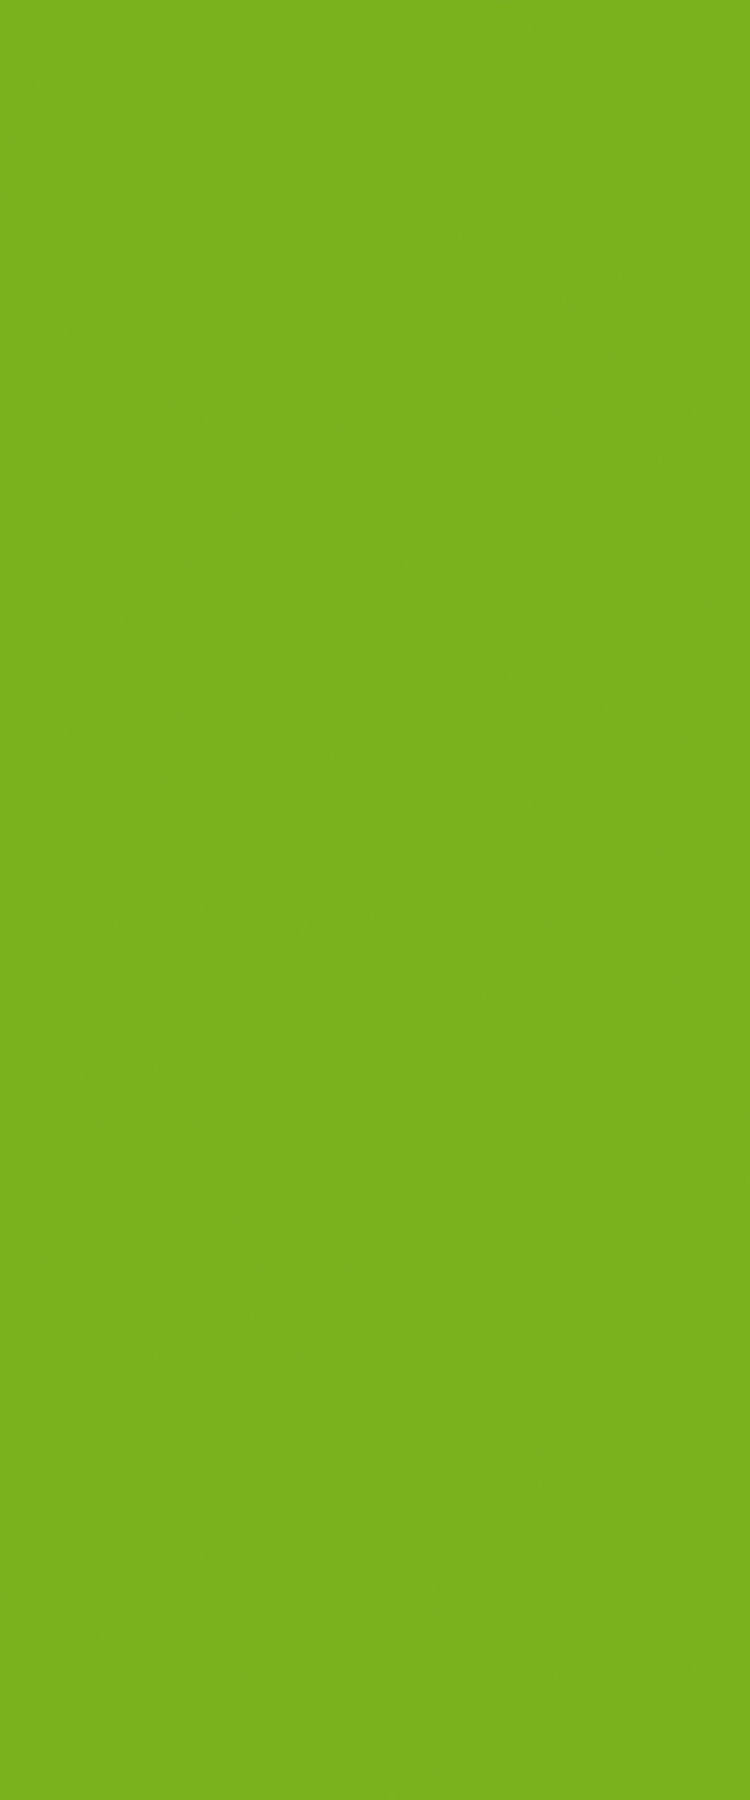 6901 Vibrant Green - Solid Colors